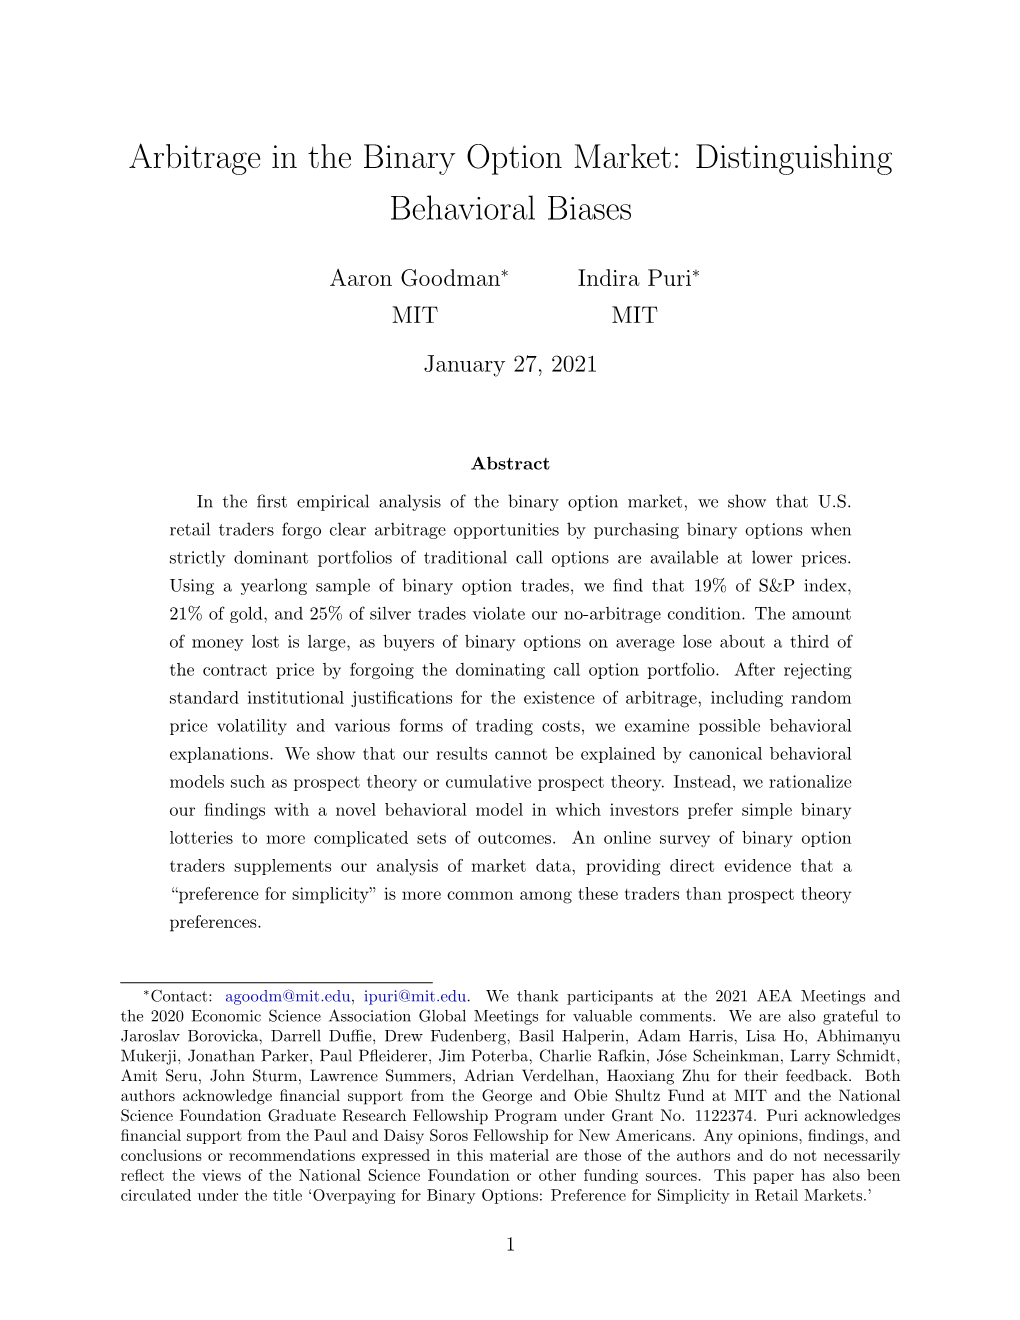 Arbitrage in the Binary Option Market: Distinguishing Behavioral Biases